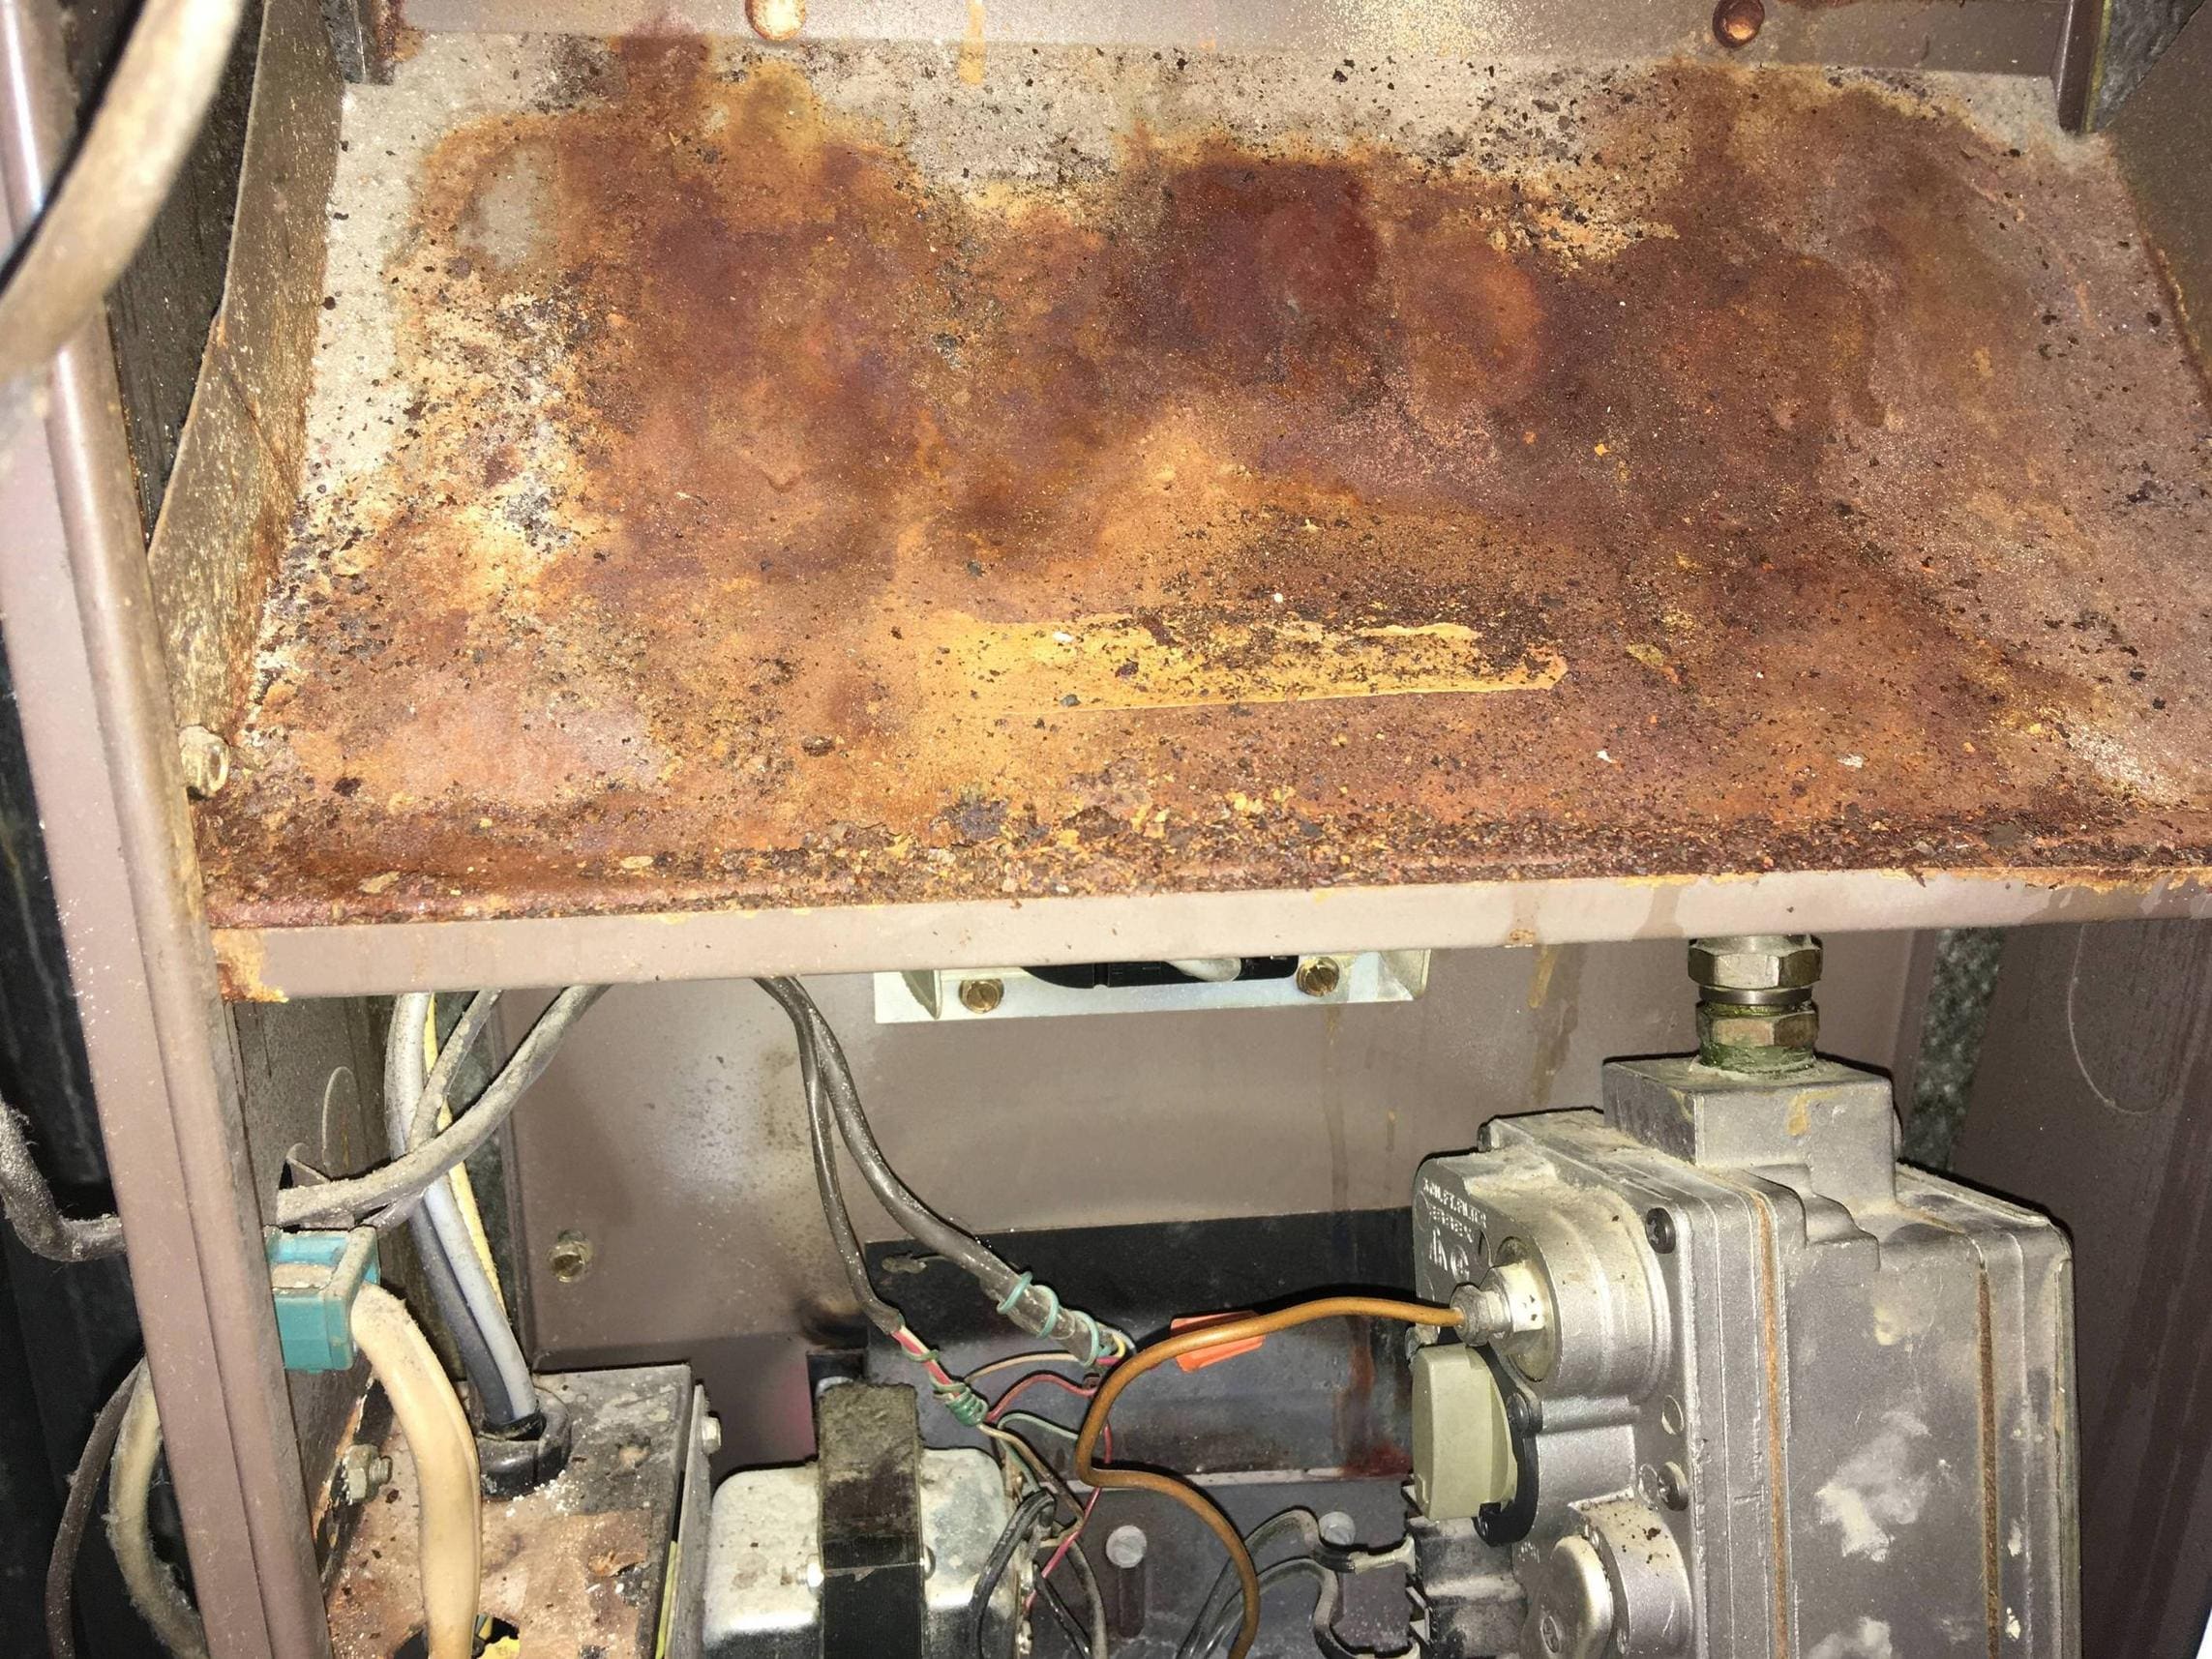 Rusted drain pan causing ac to leak water